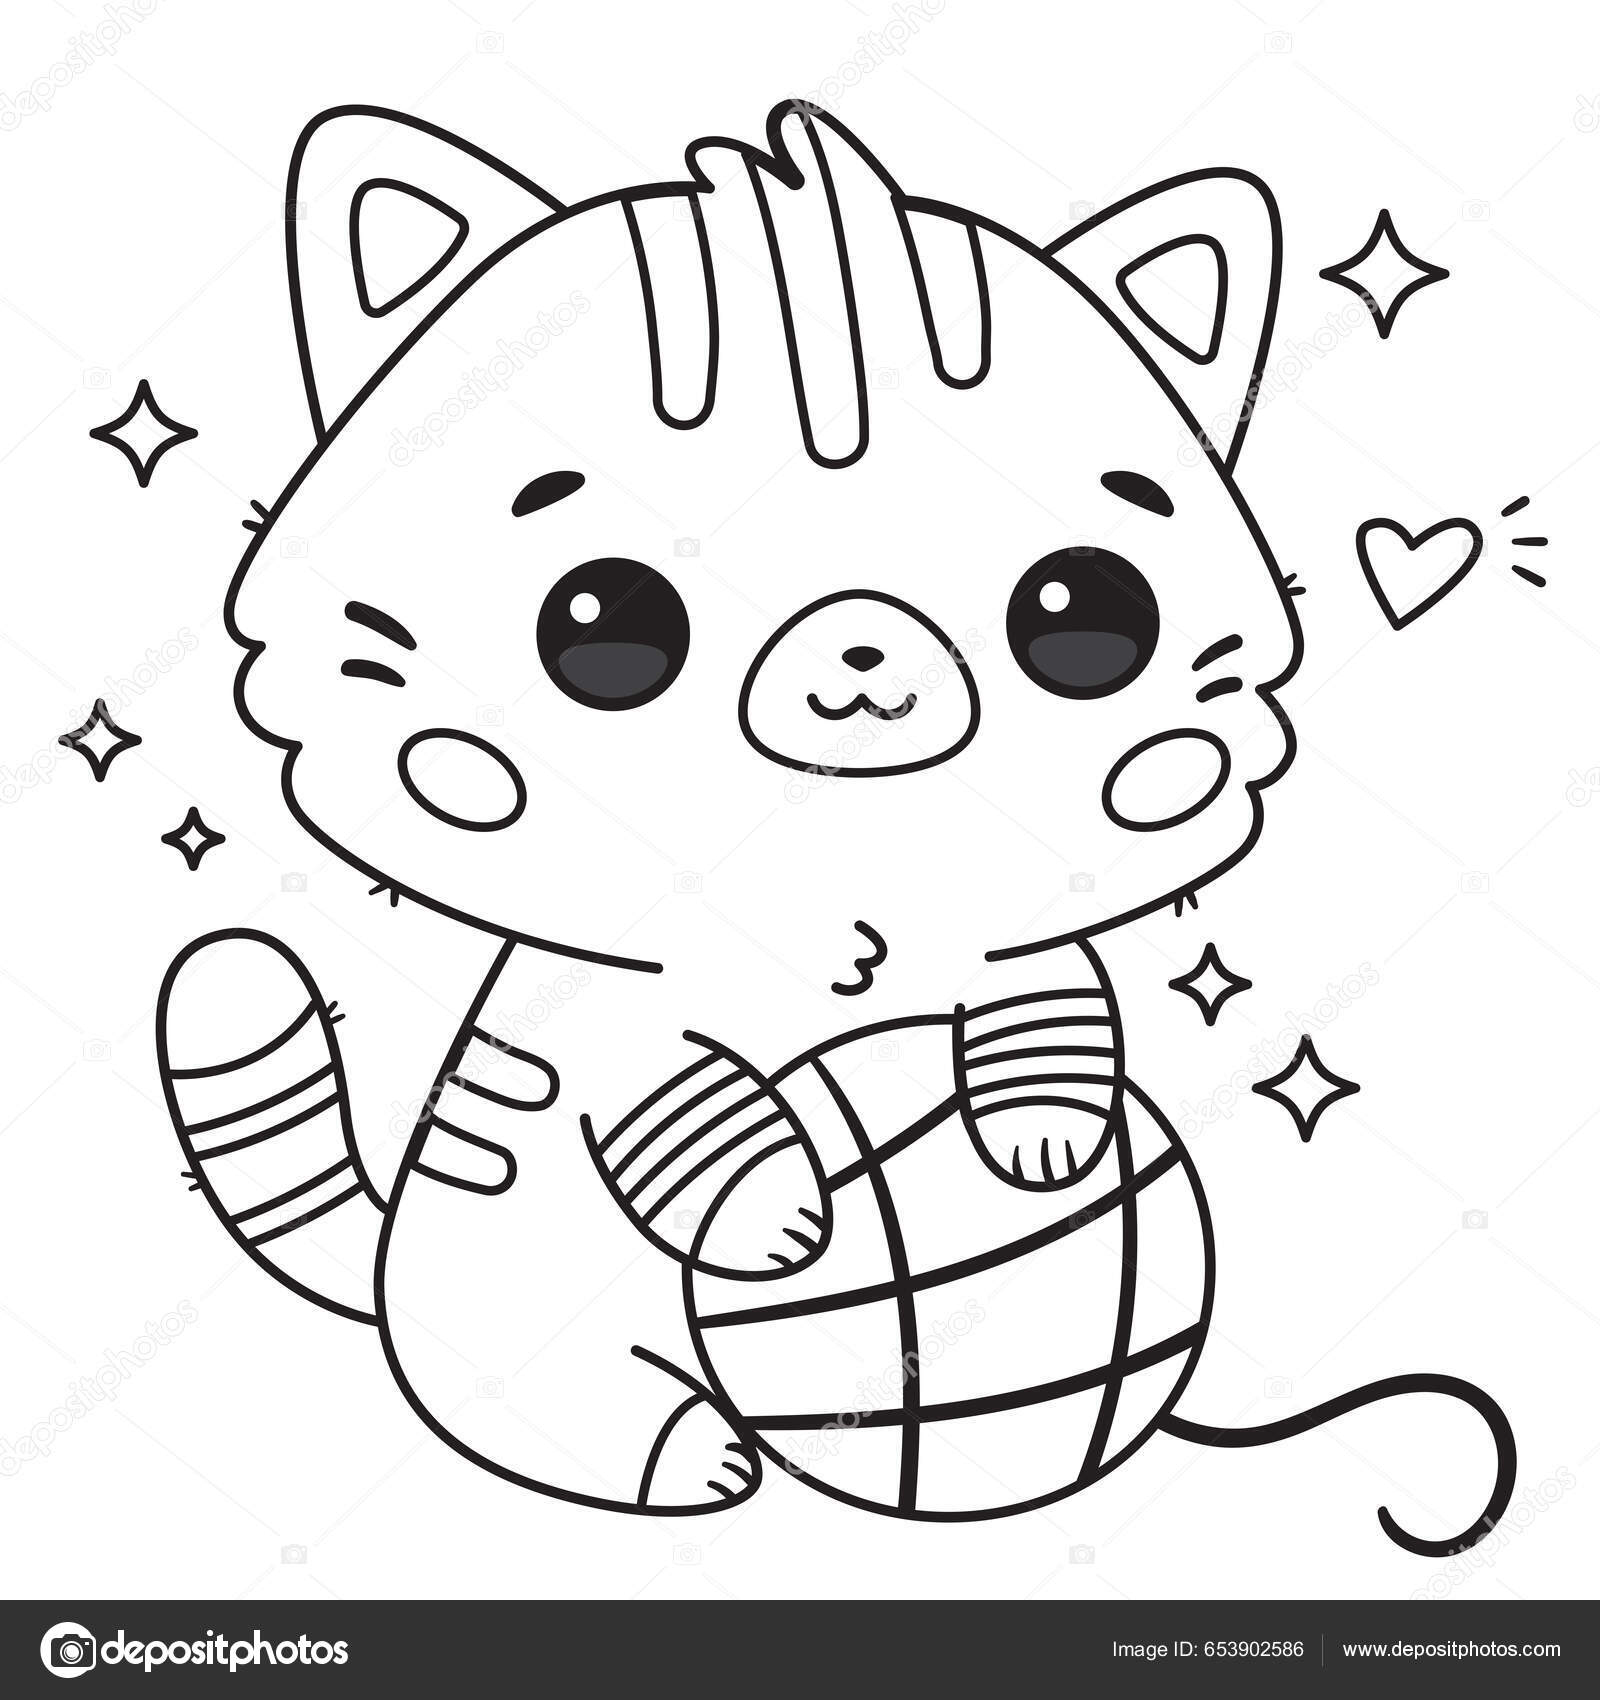 Desenho para colorir de gato Kawaii preto e branco · Creative Fabrica